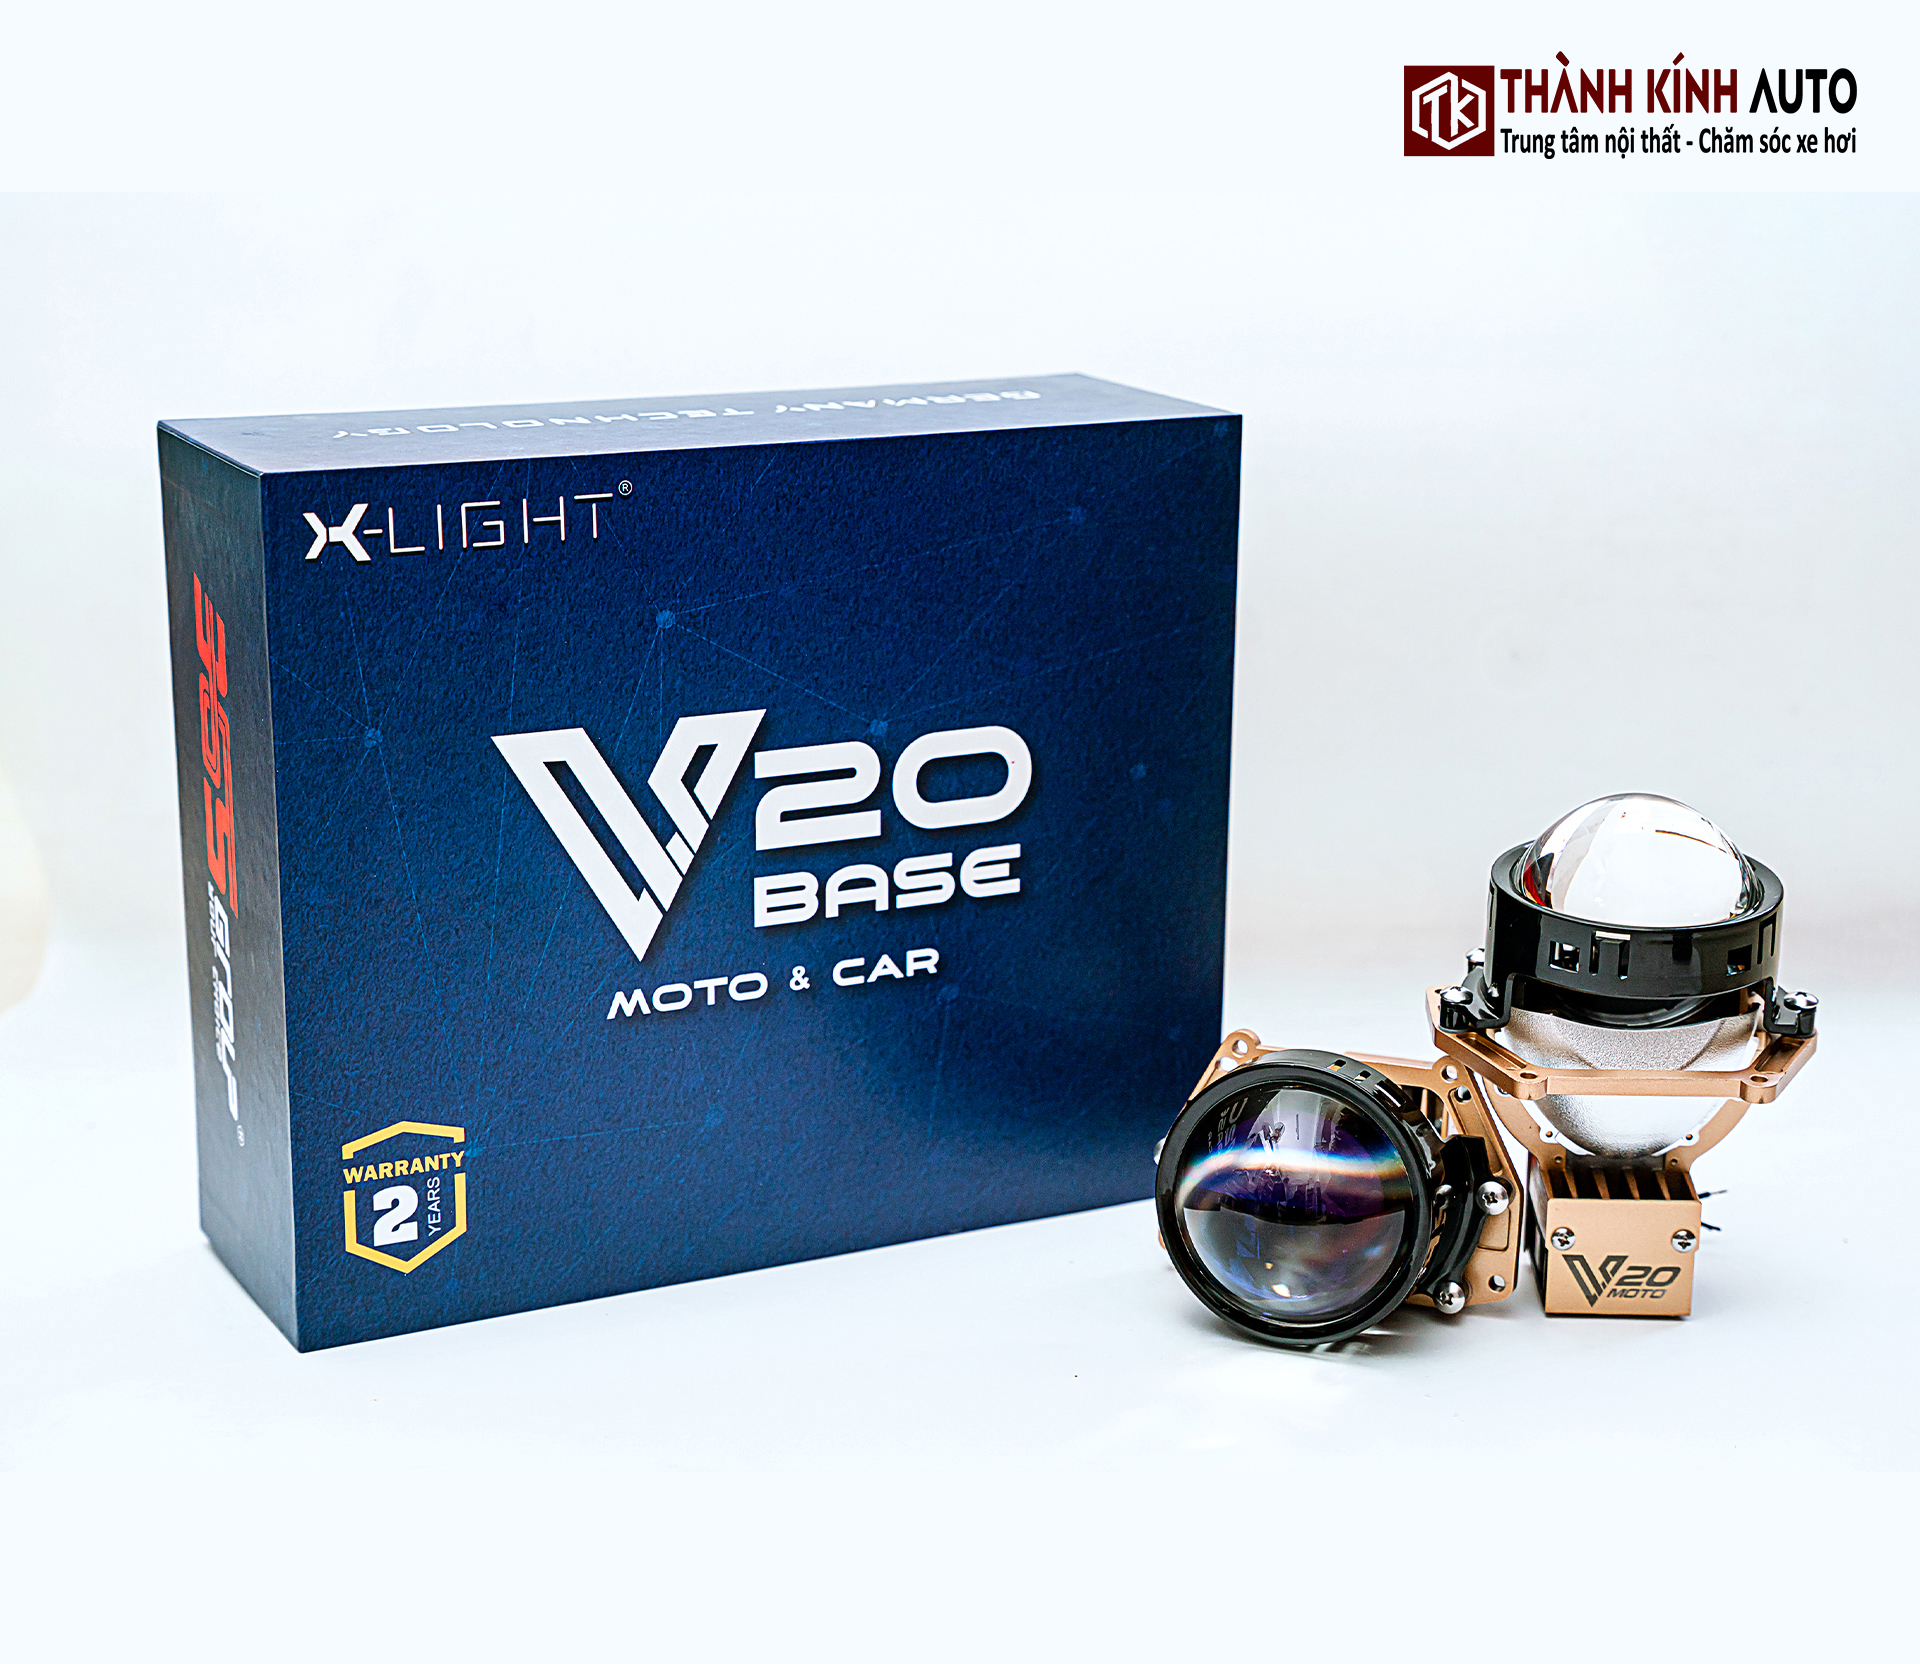 Bi led X-Light V20 Base